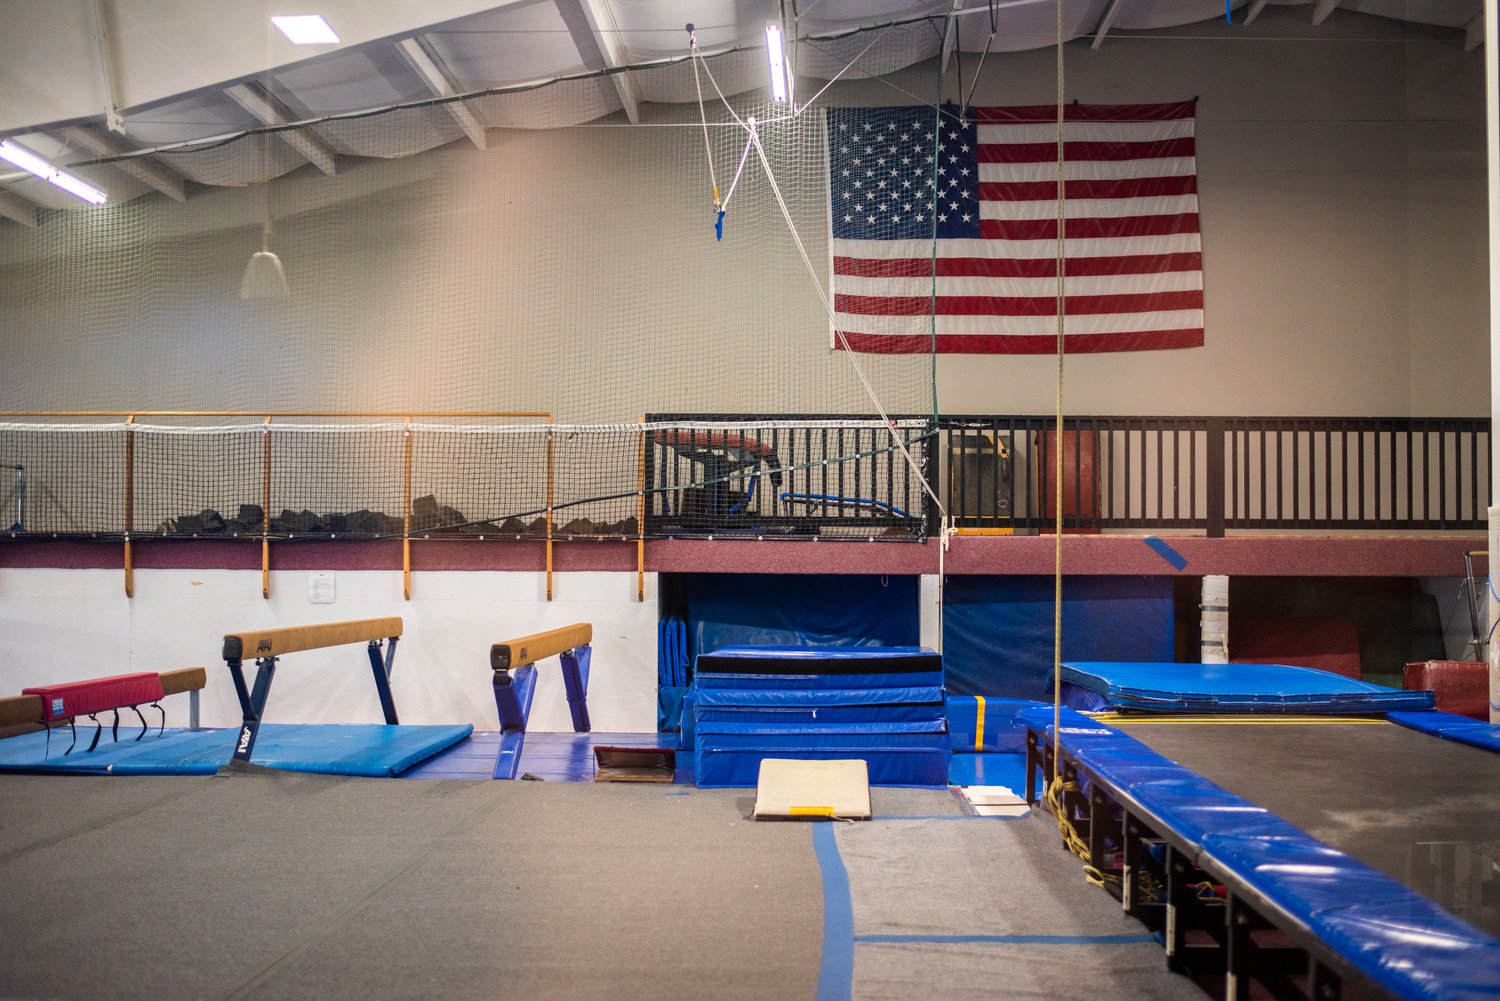 An American Flag hangs on display at the Thorbeckes gymnastics gym.